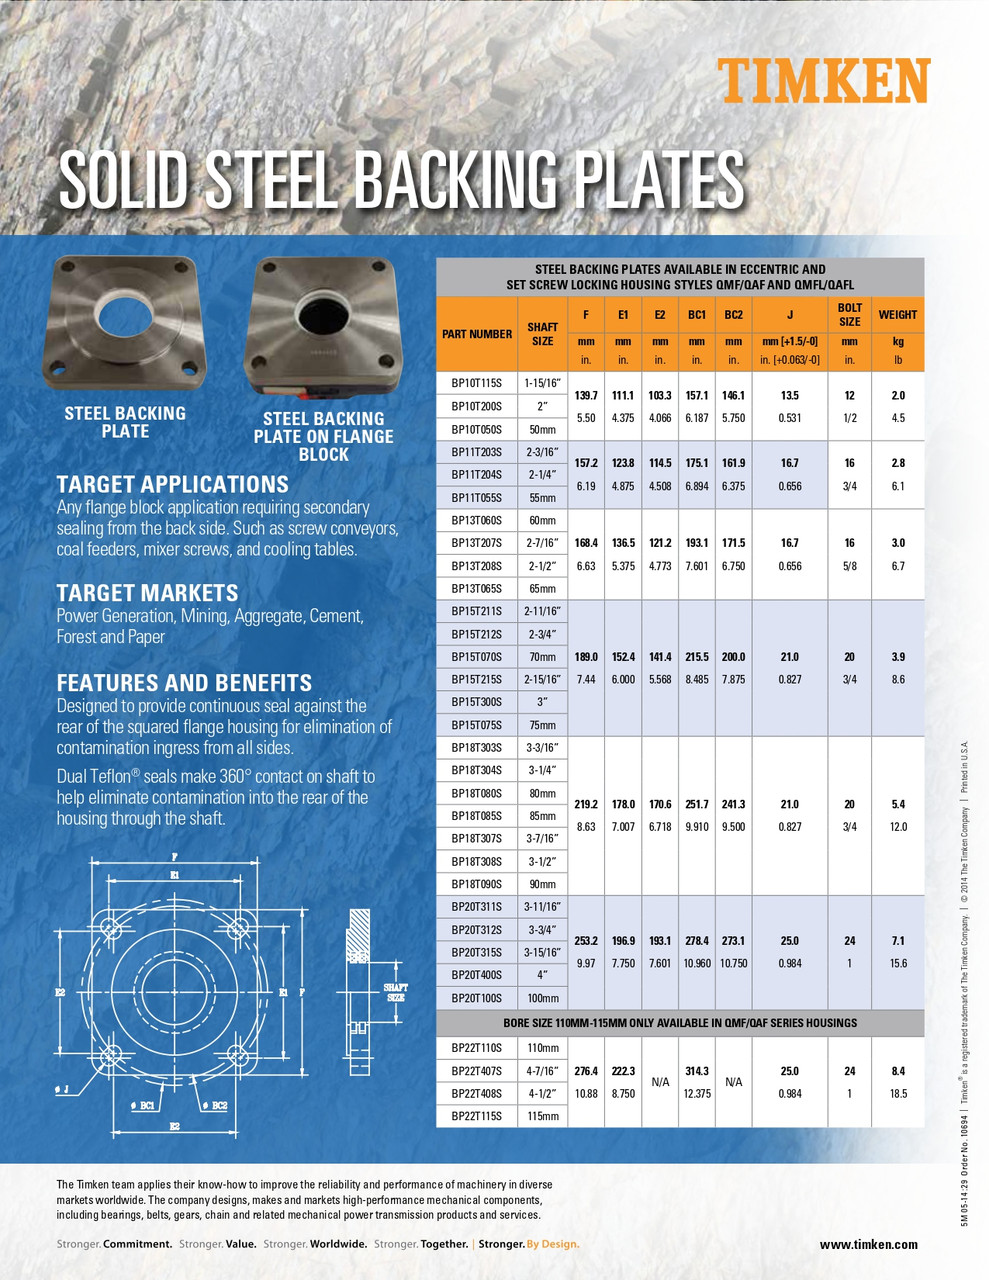 70mm Timken SRB Square Flange Backing Plate w/Dual Teflon Seals  BP15T070S